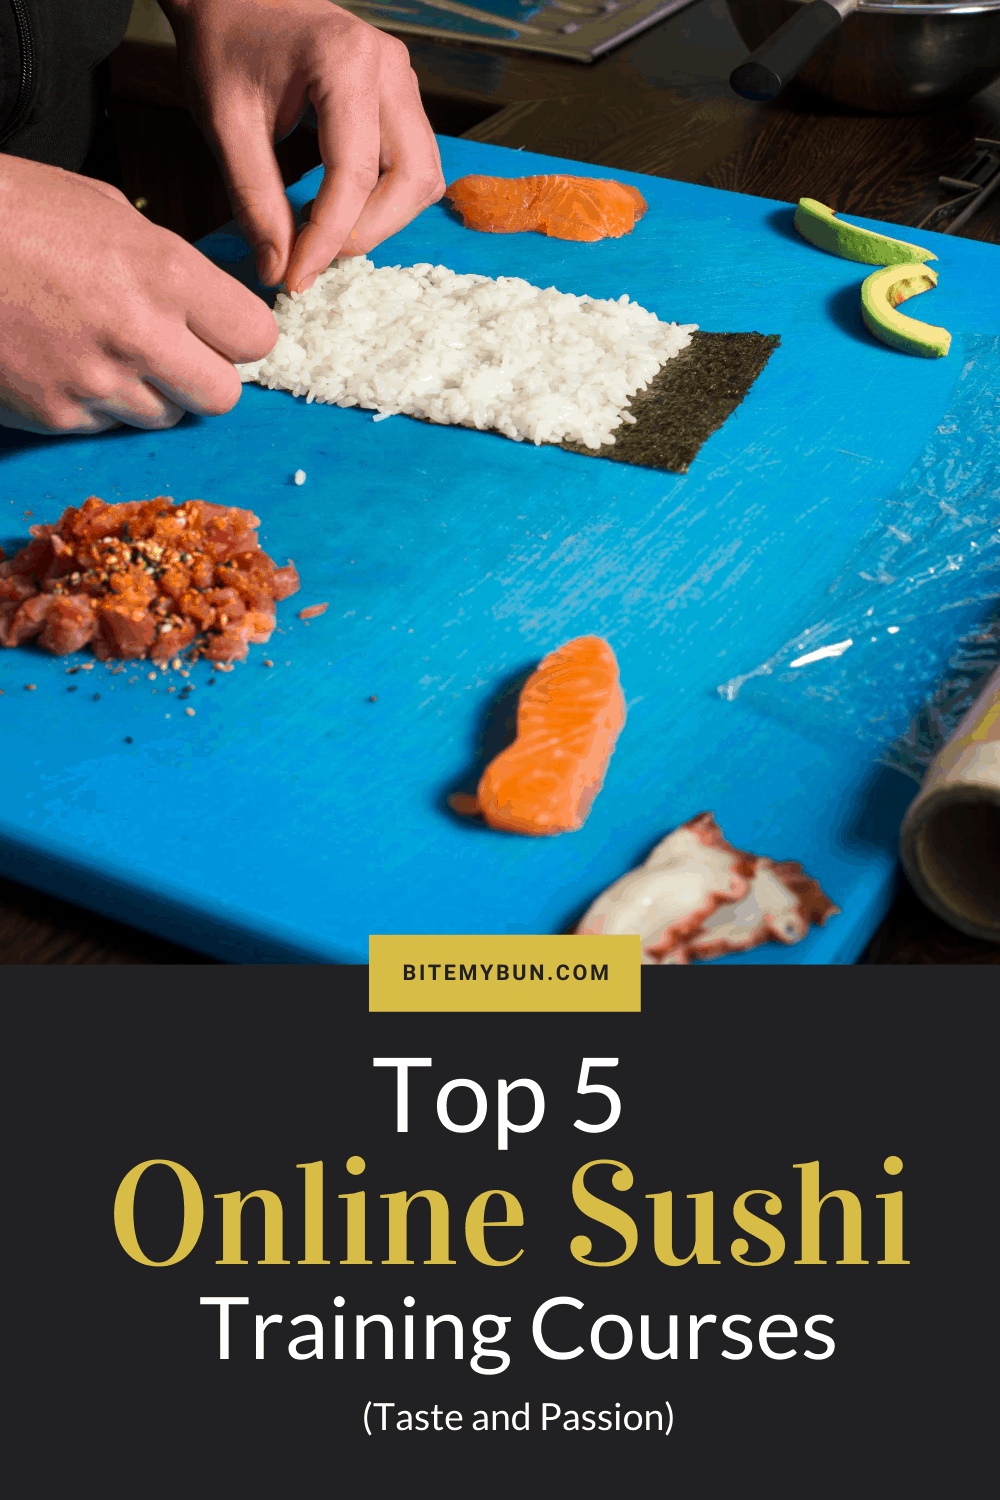 Cursos de sushi online